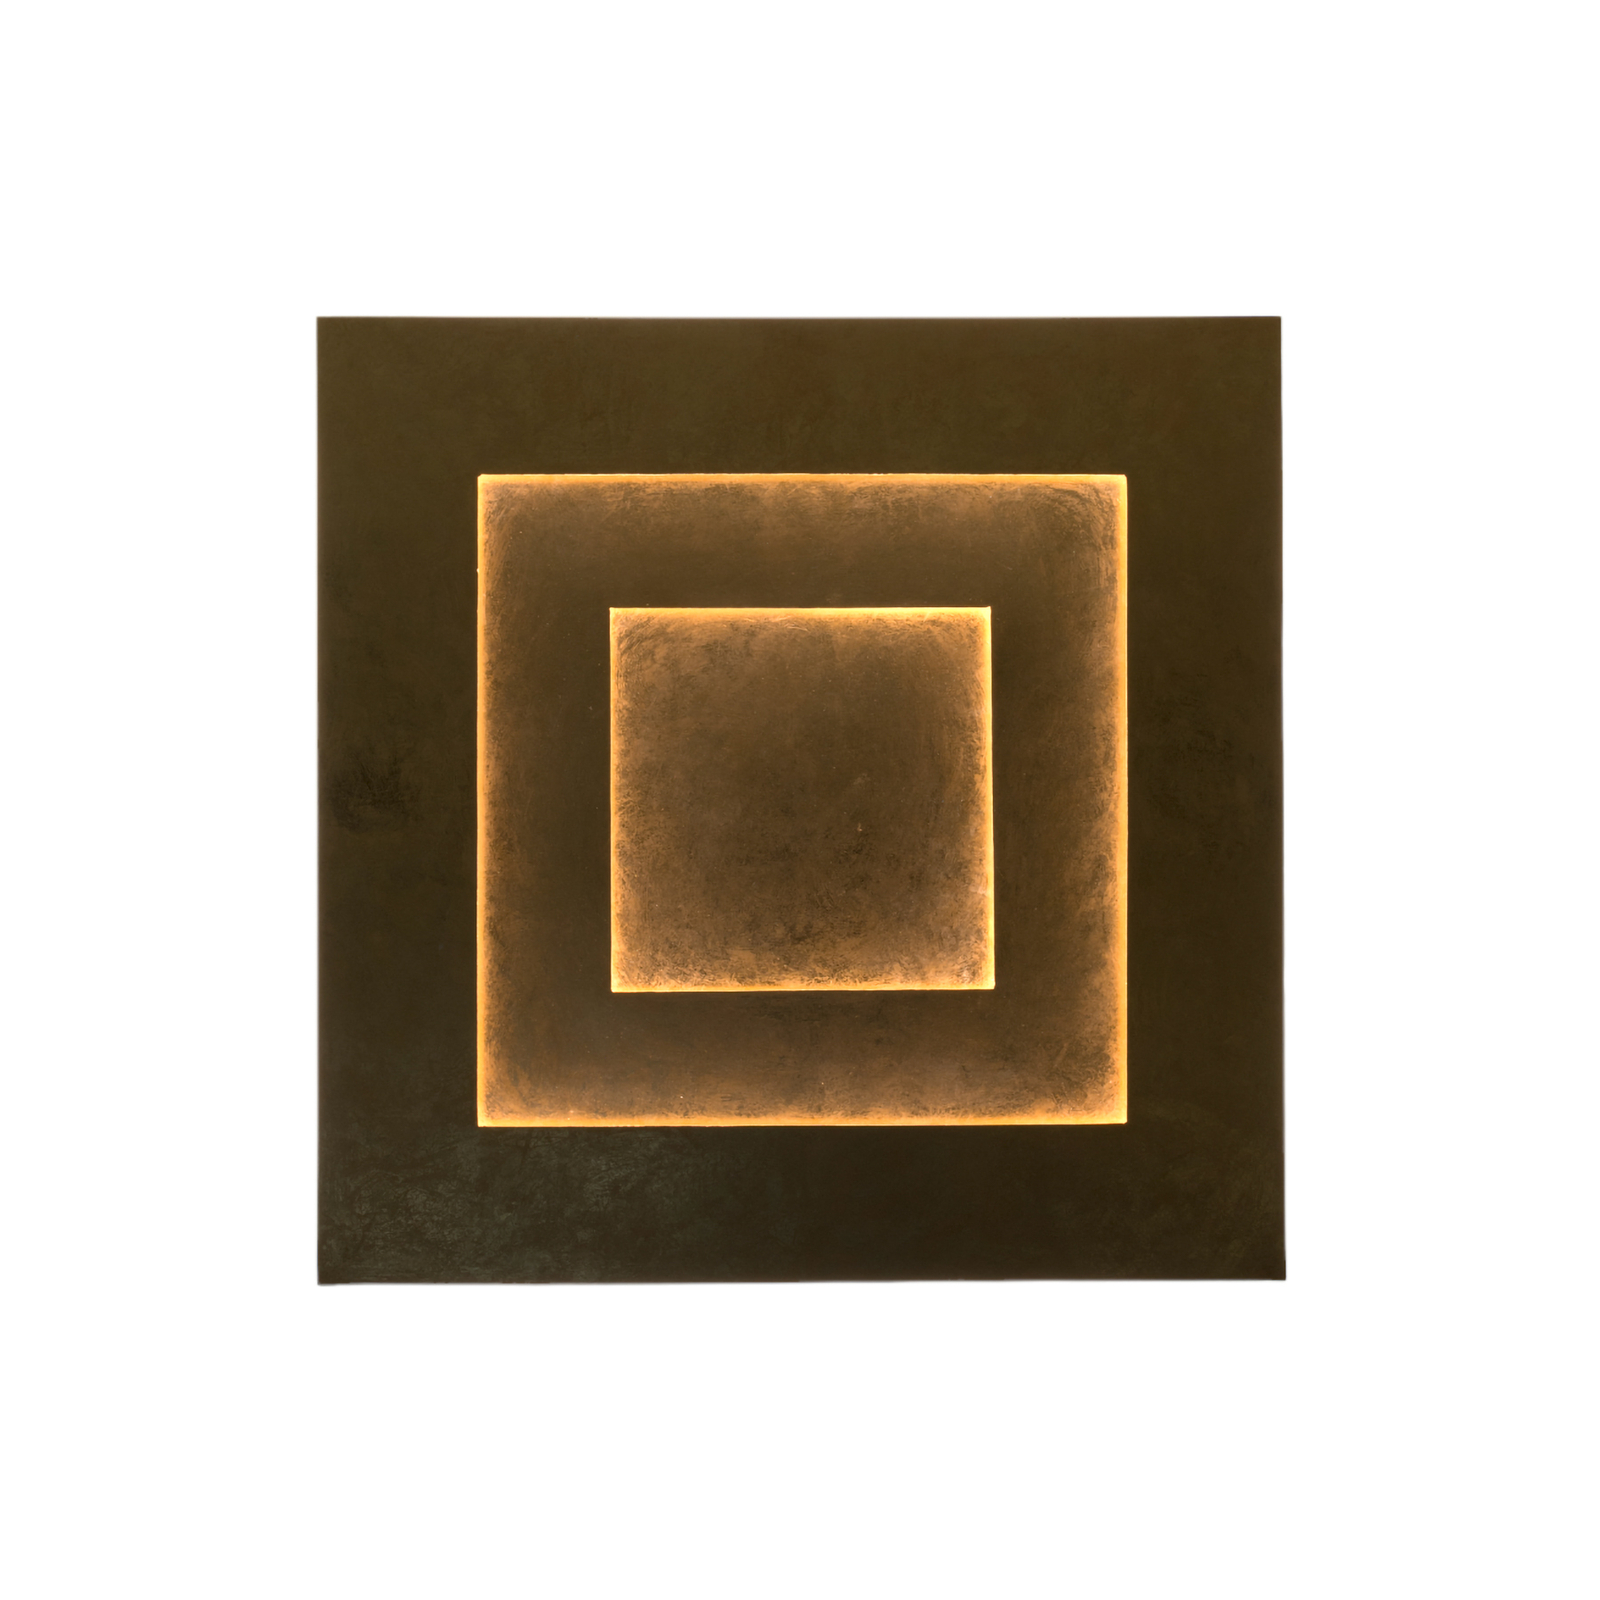 Masaccio Quadro LED wall light, gold